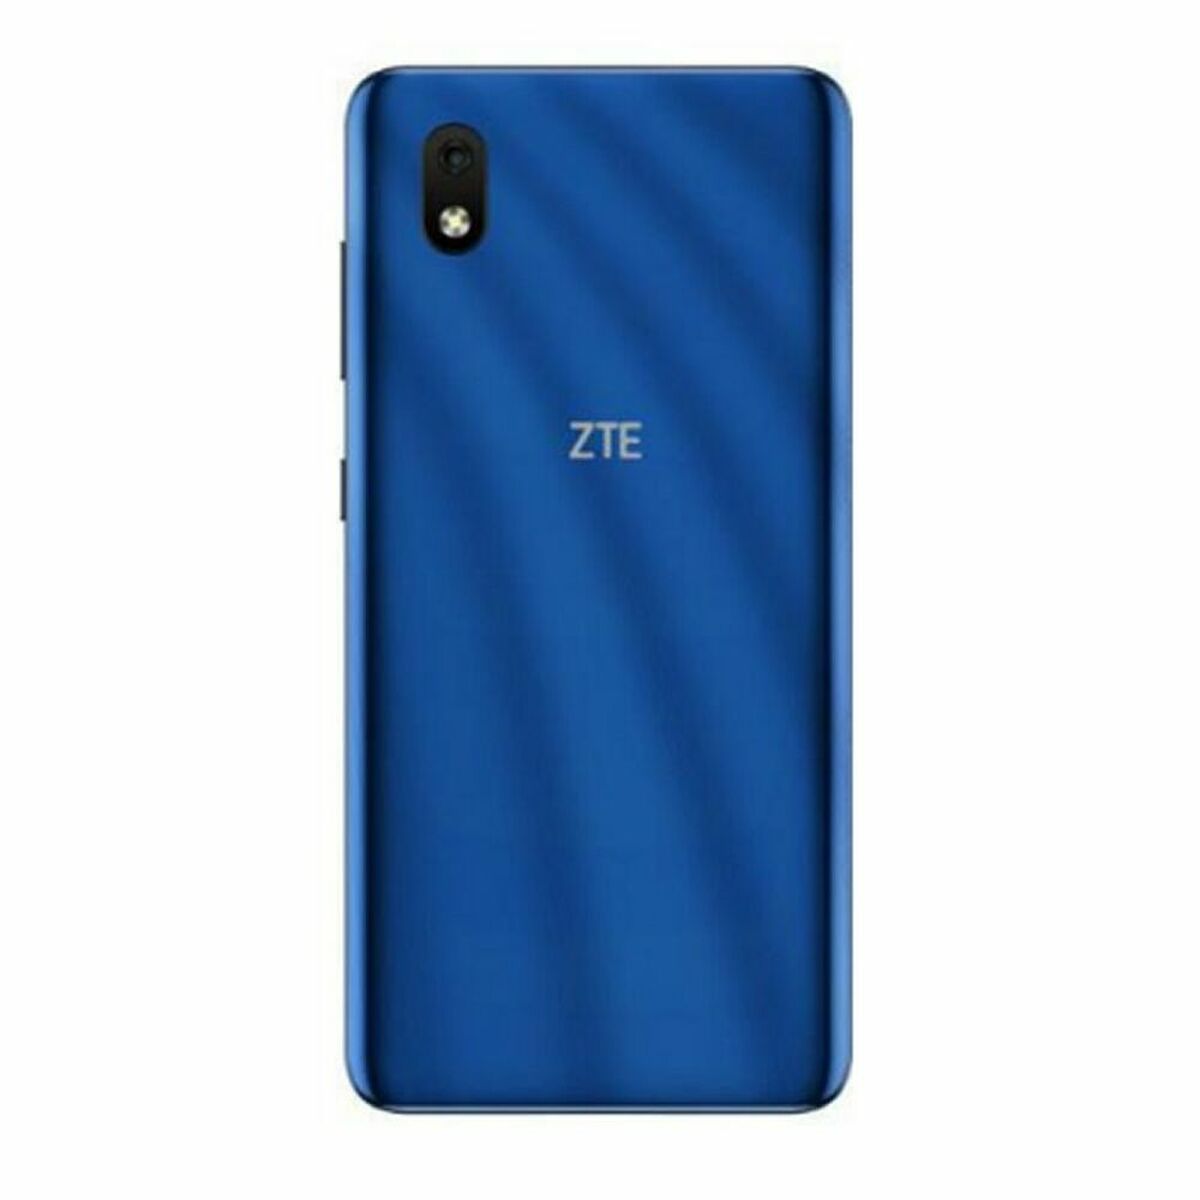 Smartphone ZTE 1GB/32GB 1,4 GHz Spreadtrum 1 GB RAM 32 GB Blue 5" (Refurbished B)